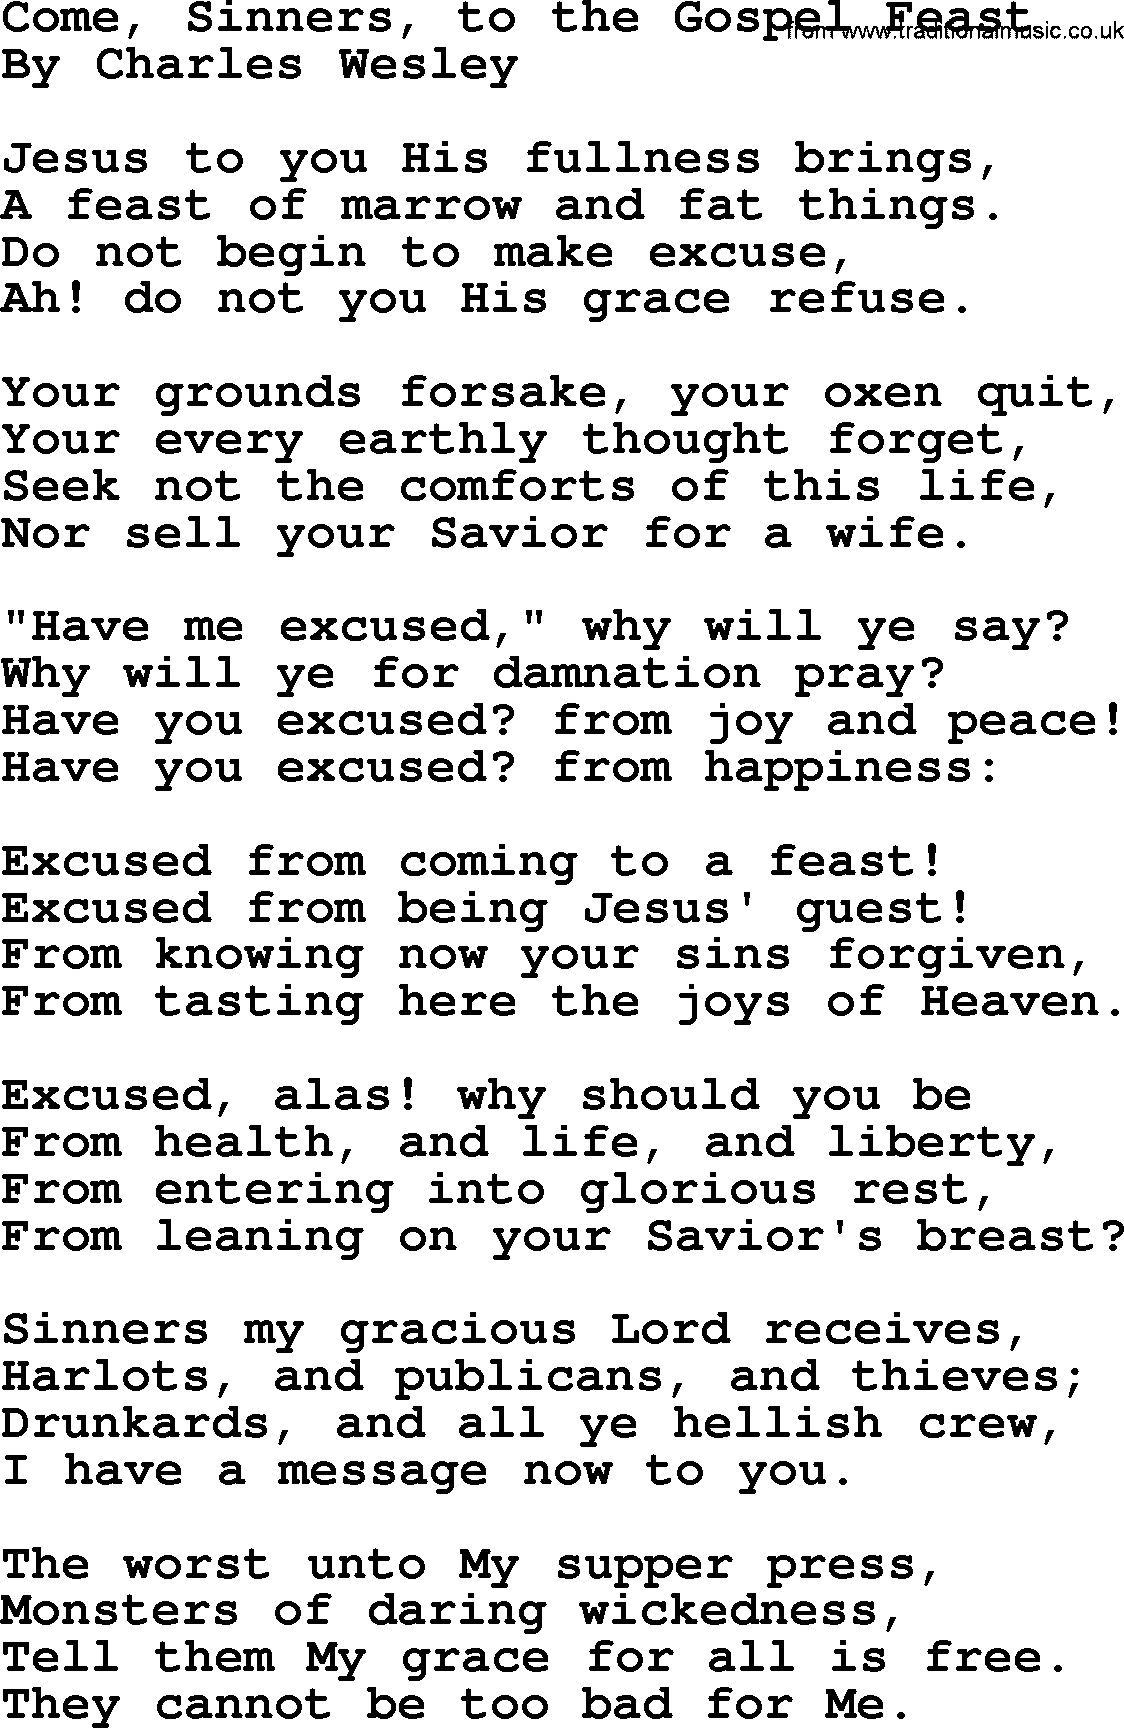 Charles Wesley hymn: Come, Sinners, To The Gospel Feast, lyrics